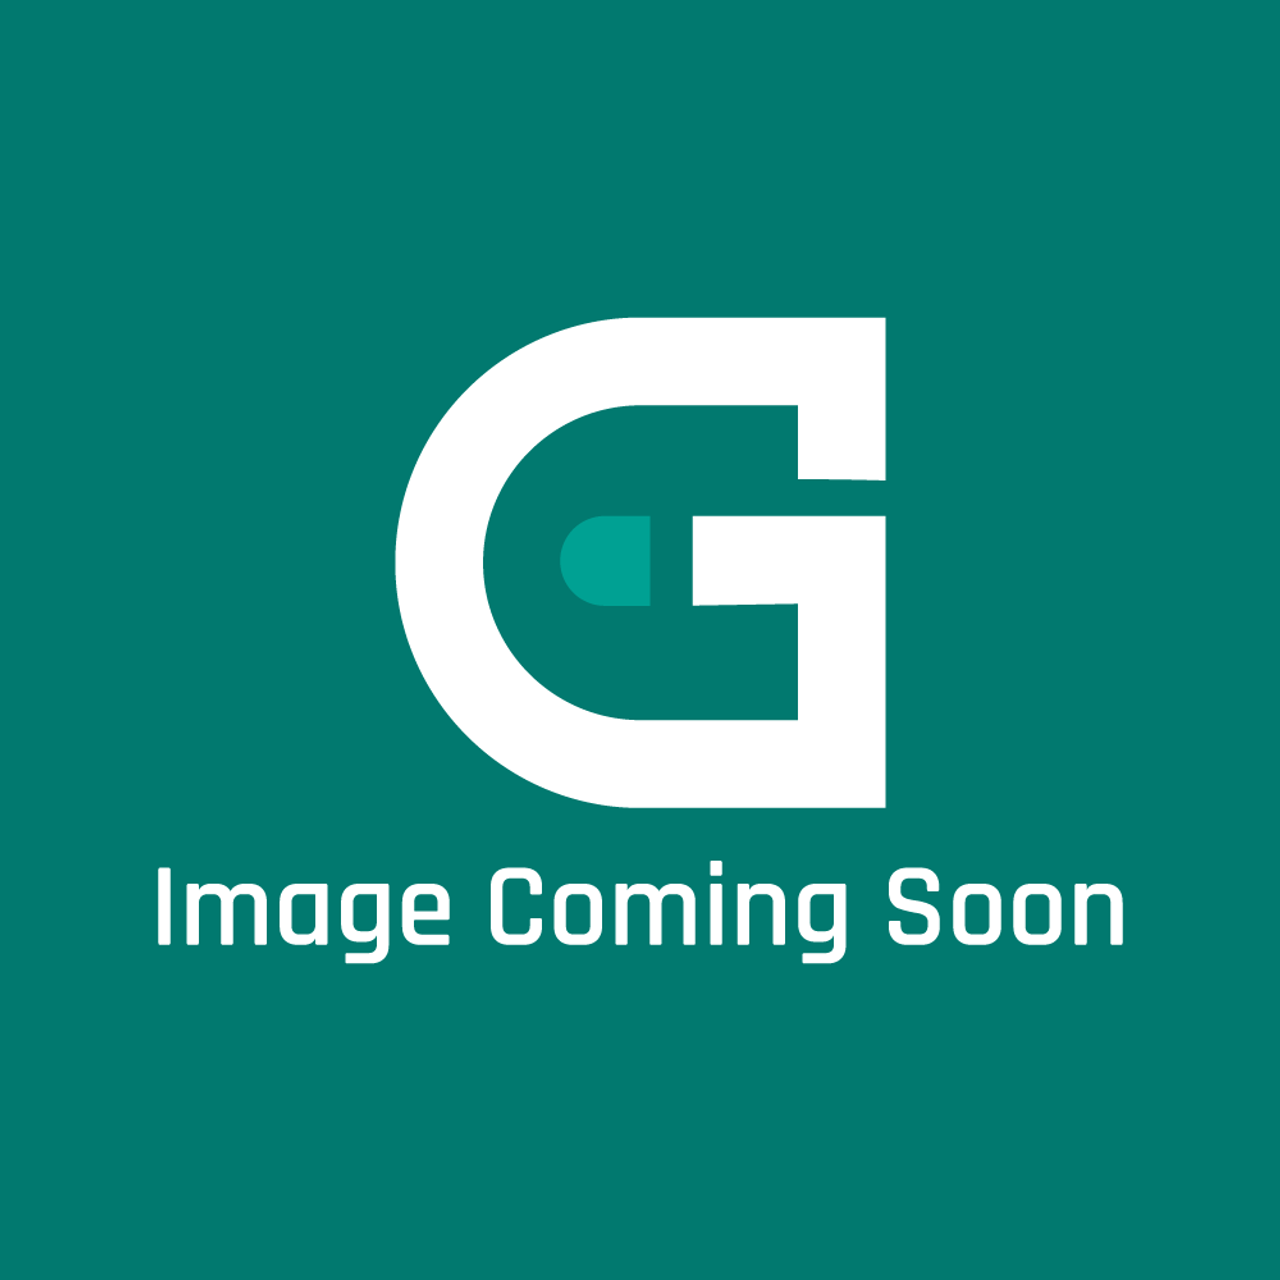 AGA Marvel E06HEATSHIELD - Aga Ellesmere 6 Heatshield (Spare) - Image Coming Soon!